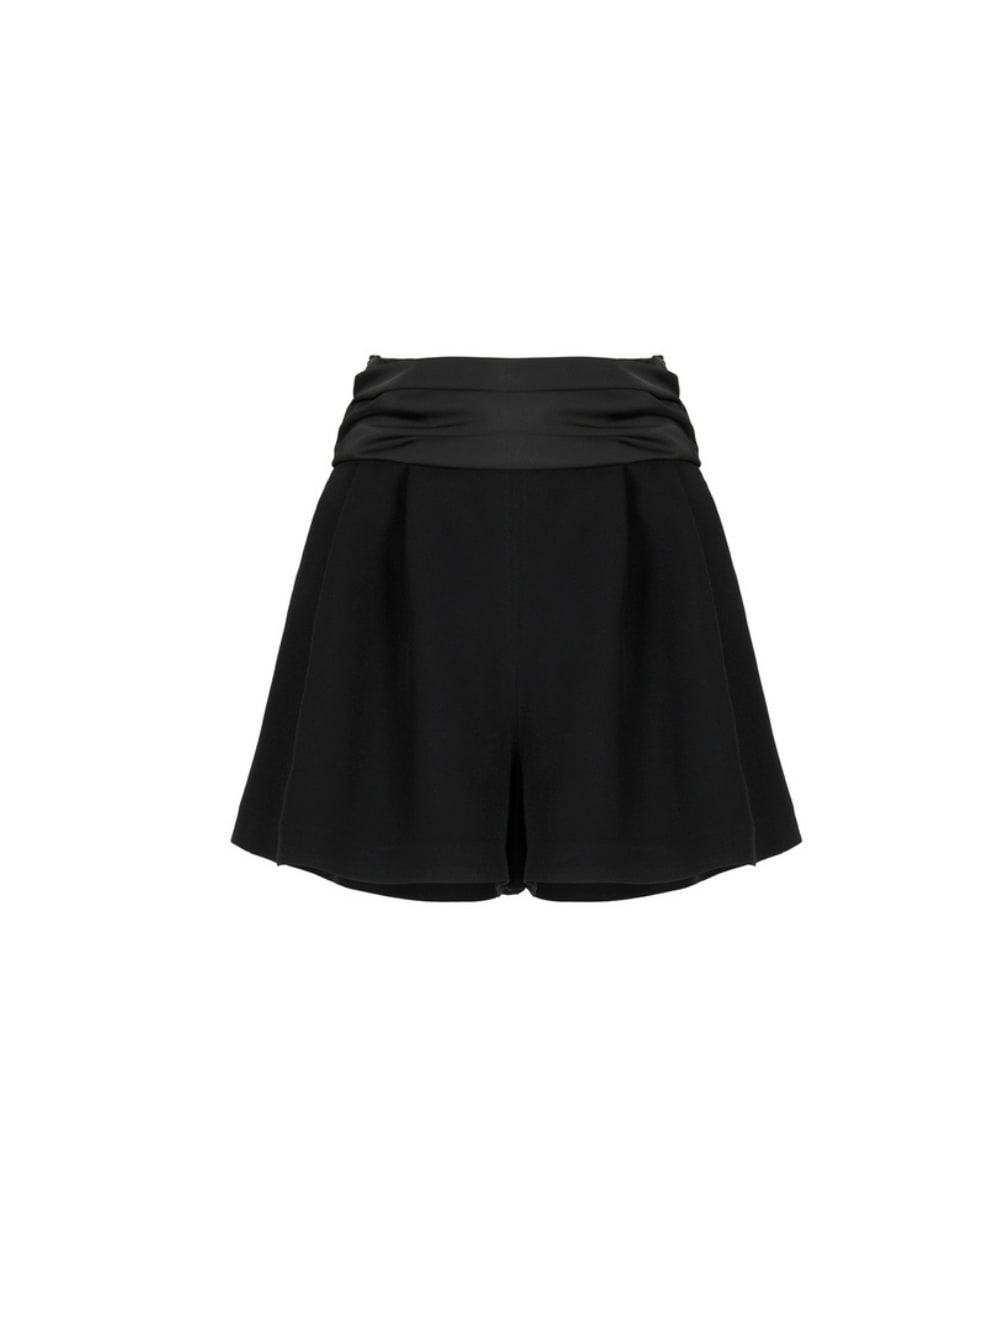 Federica Tosi Black Viscose Blend Shorts With Satin Belt